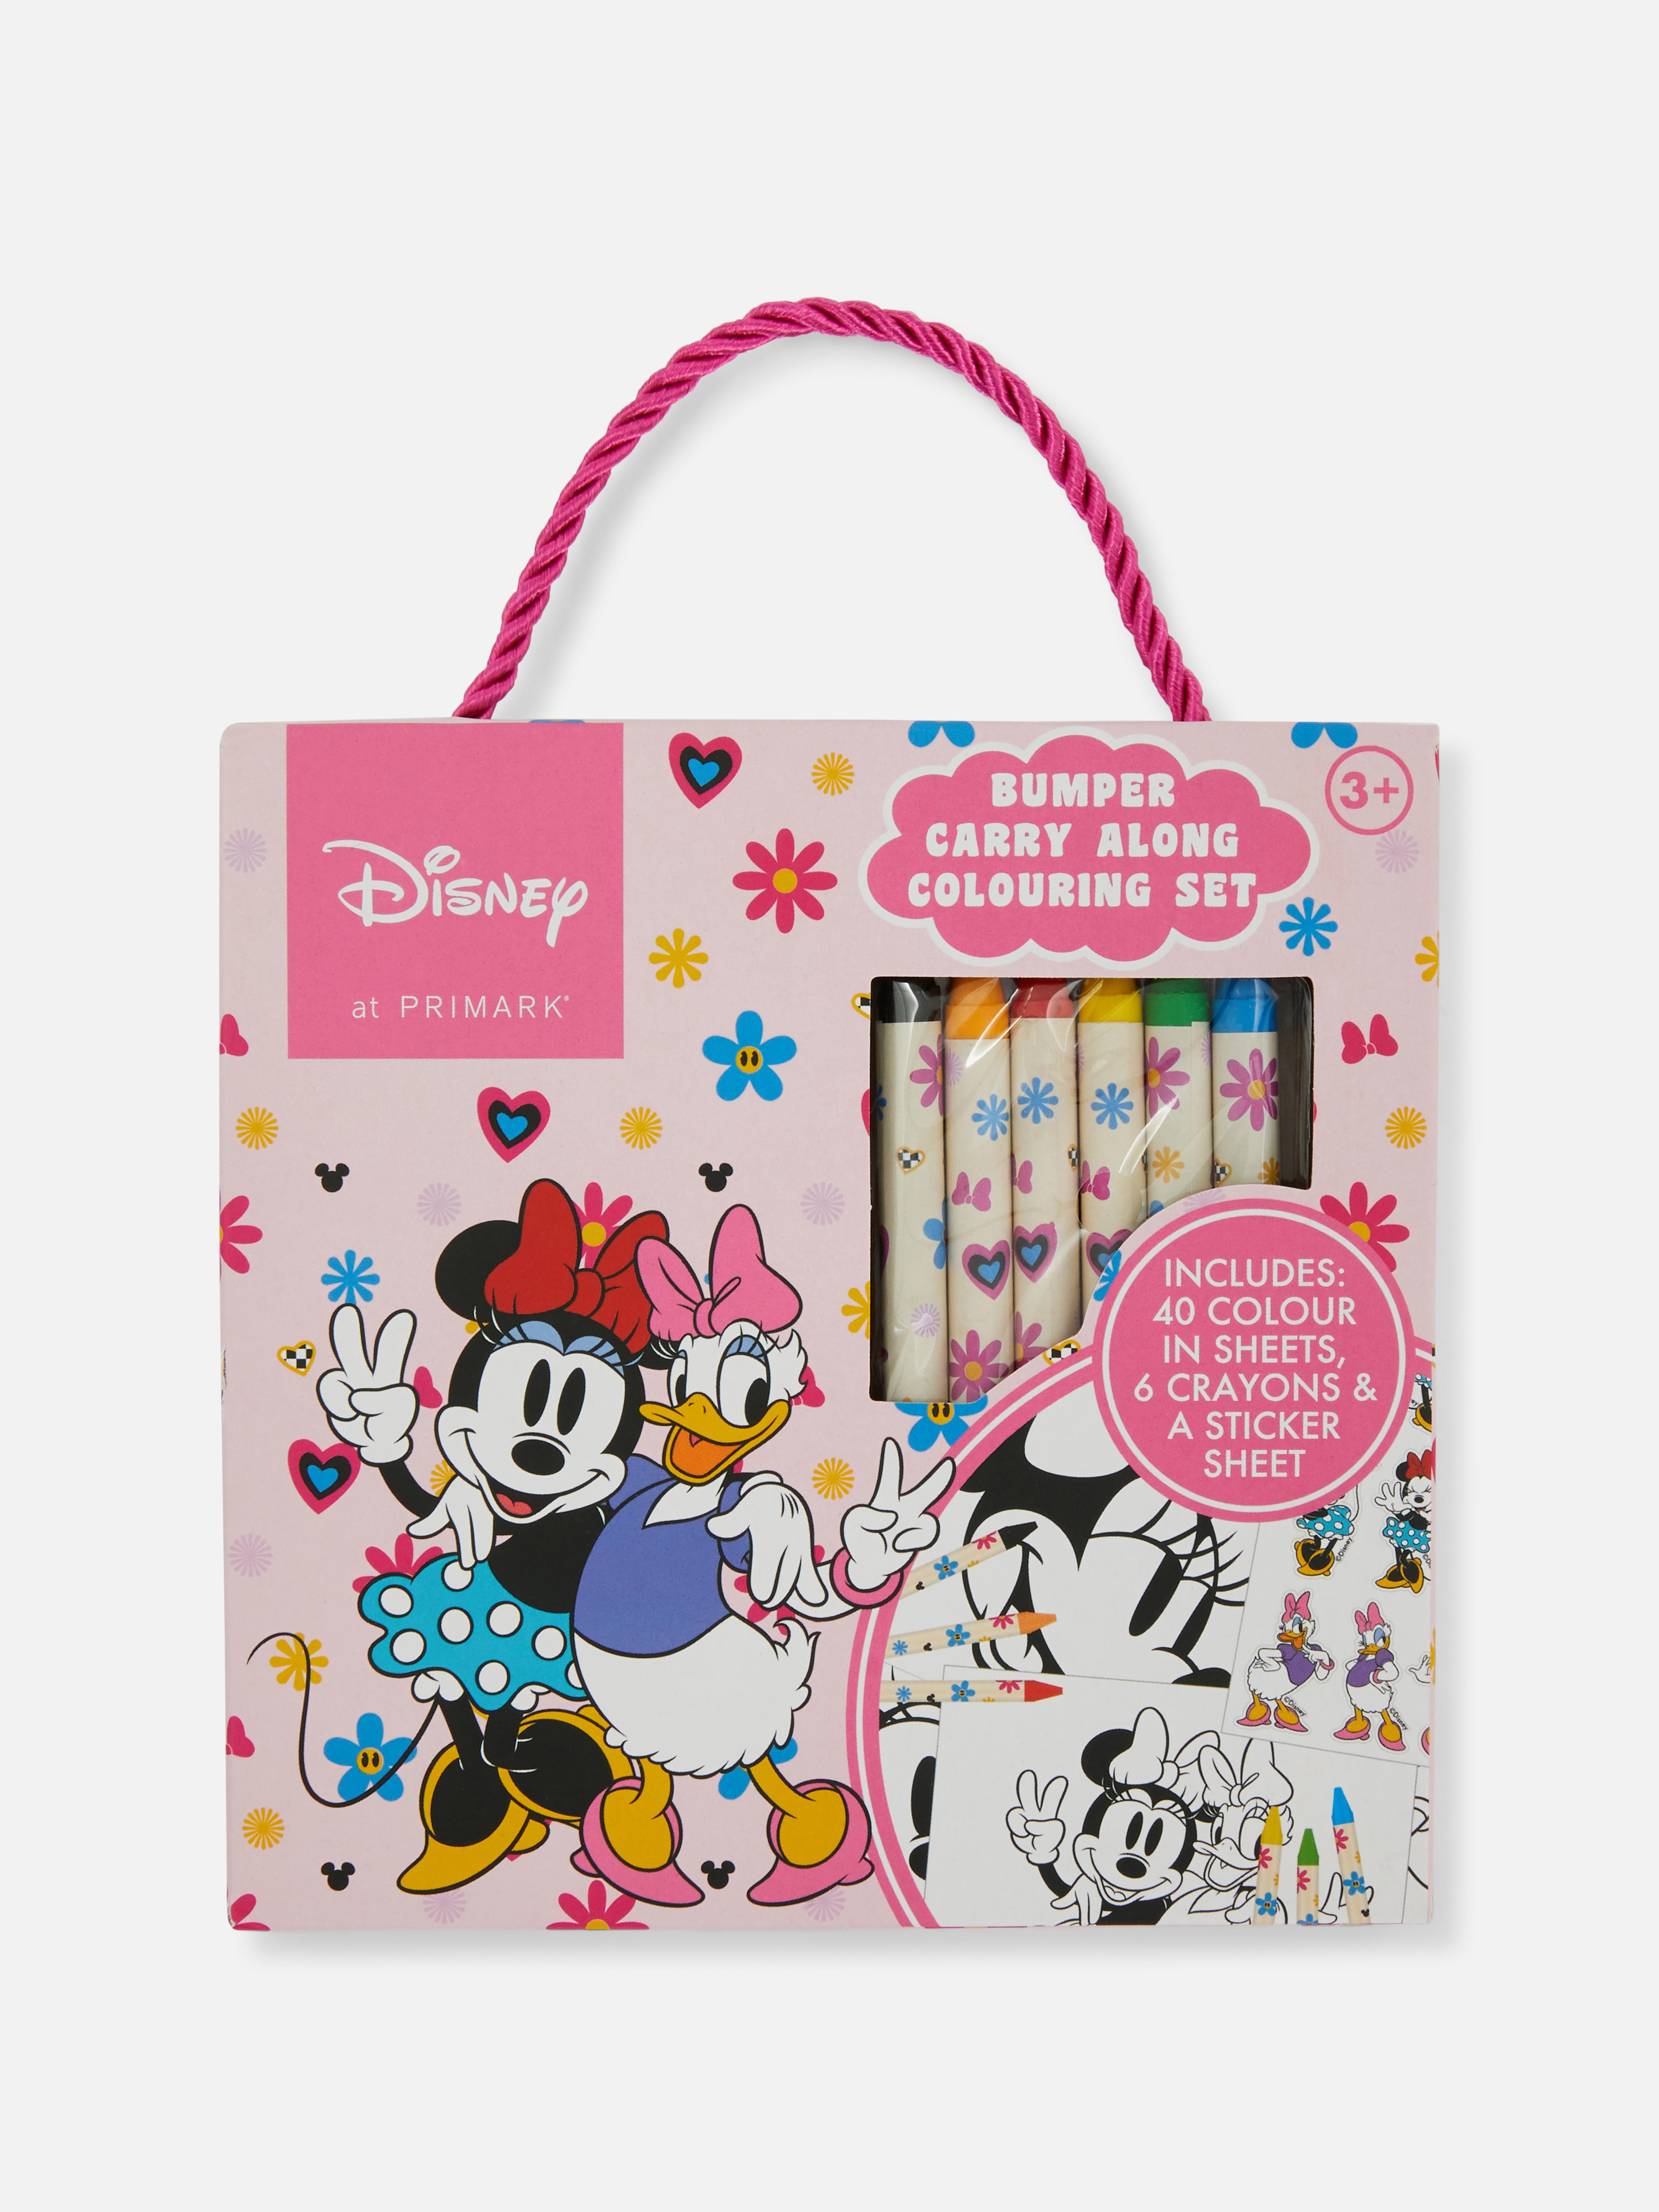 Disney’s Minnie Mouse & Daisy Duck Carry-Along Colouring Set